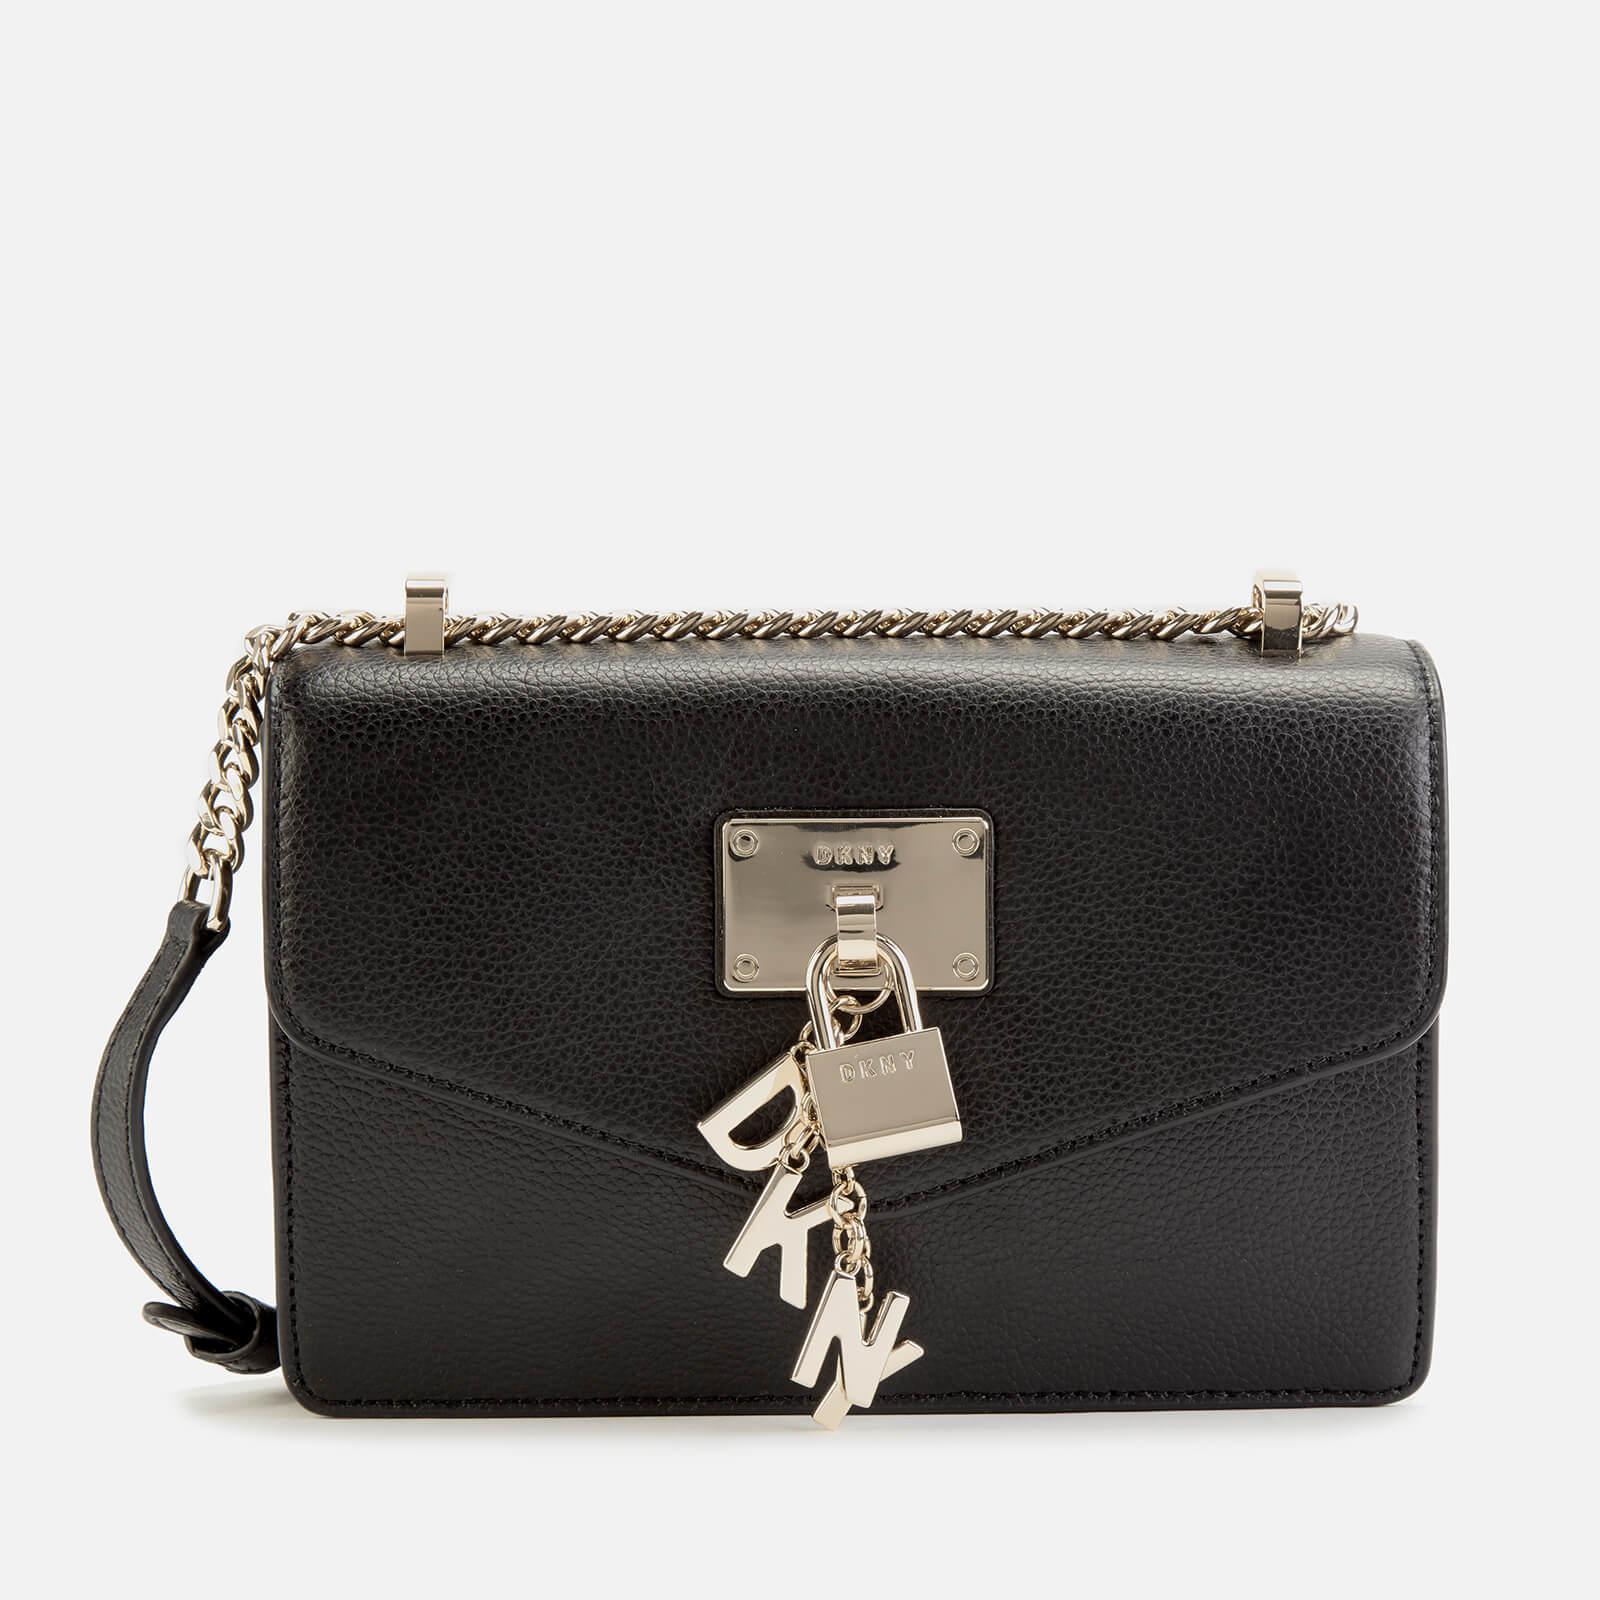 DKNY Elissa Small Leather Shoulder Bag in Black | Lyst